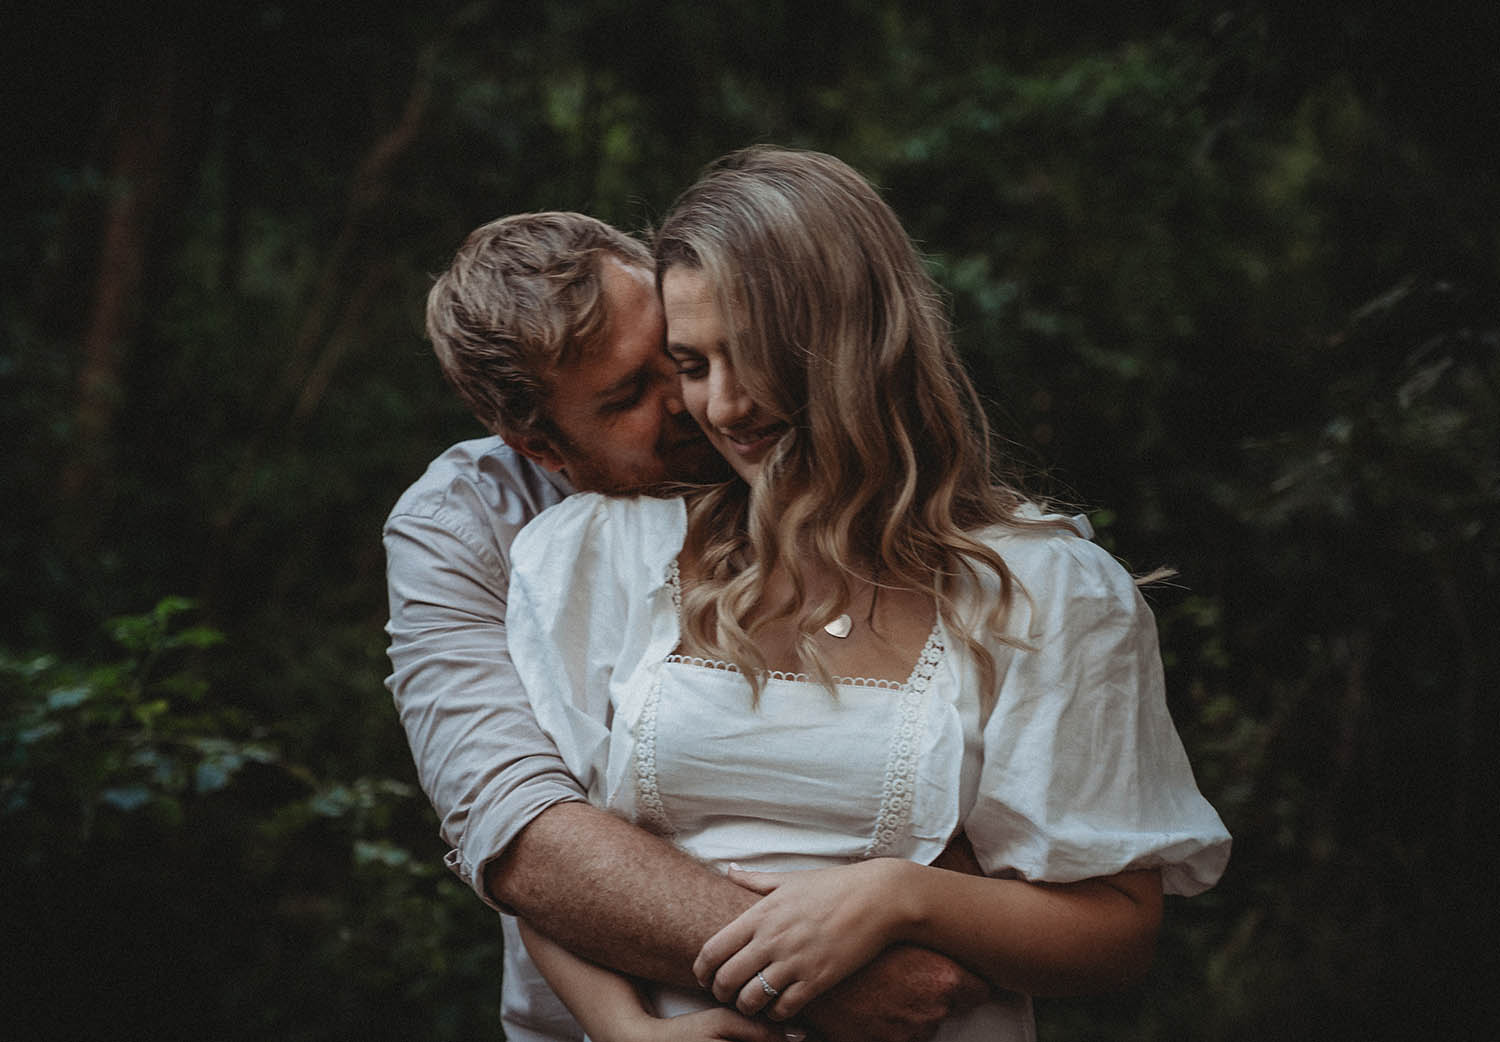 Engagement Photography - Couple embracing